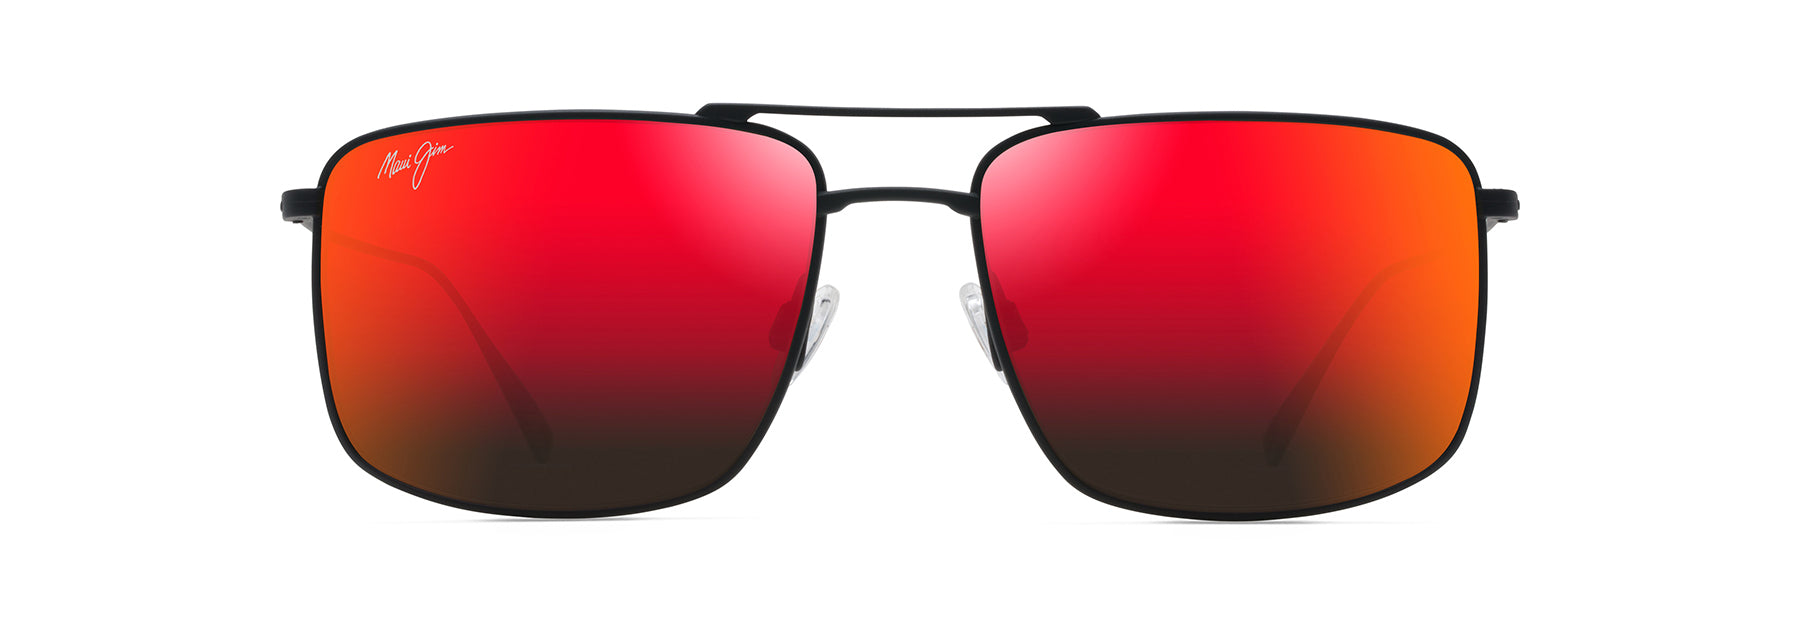 Maui Jim Aeko Sunglasses